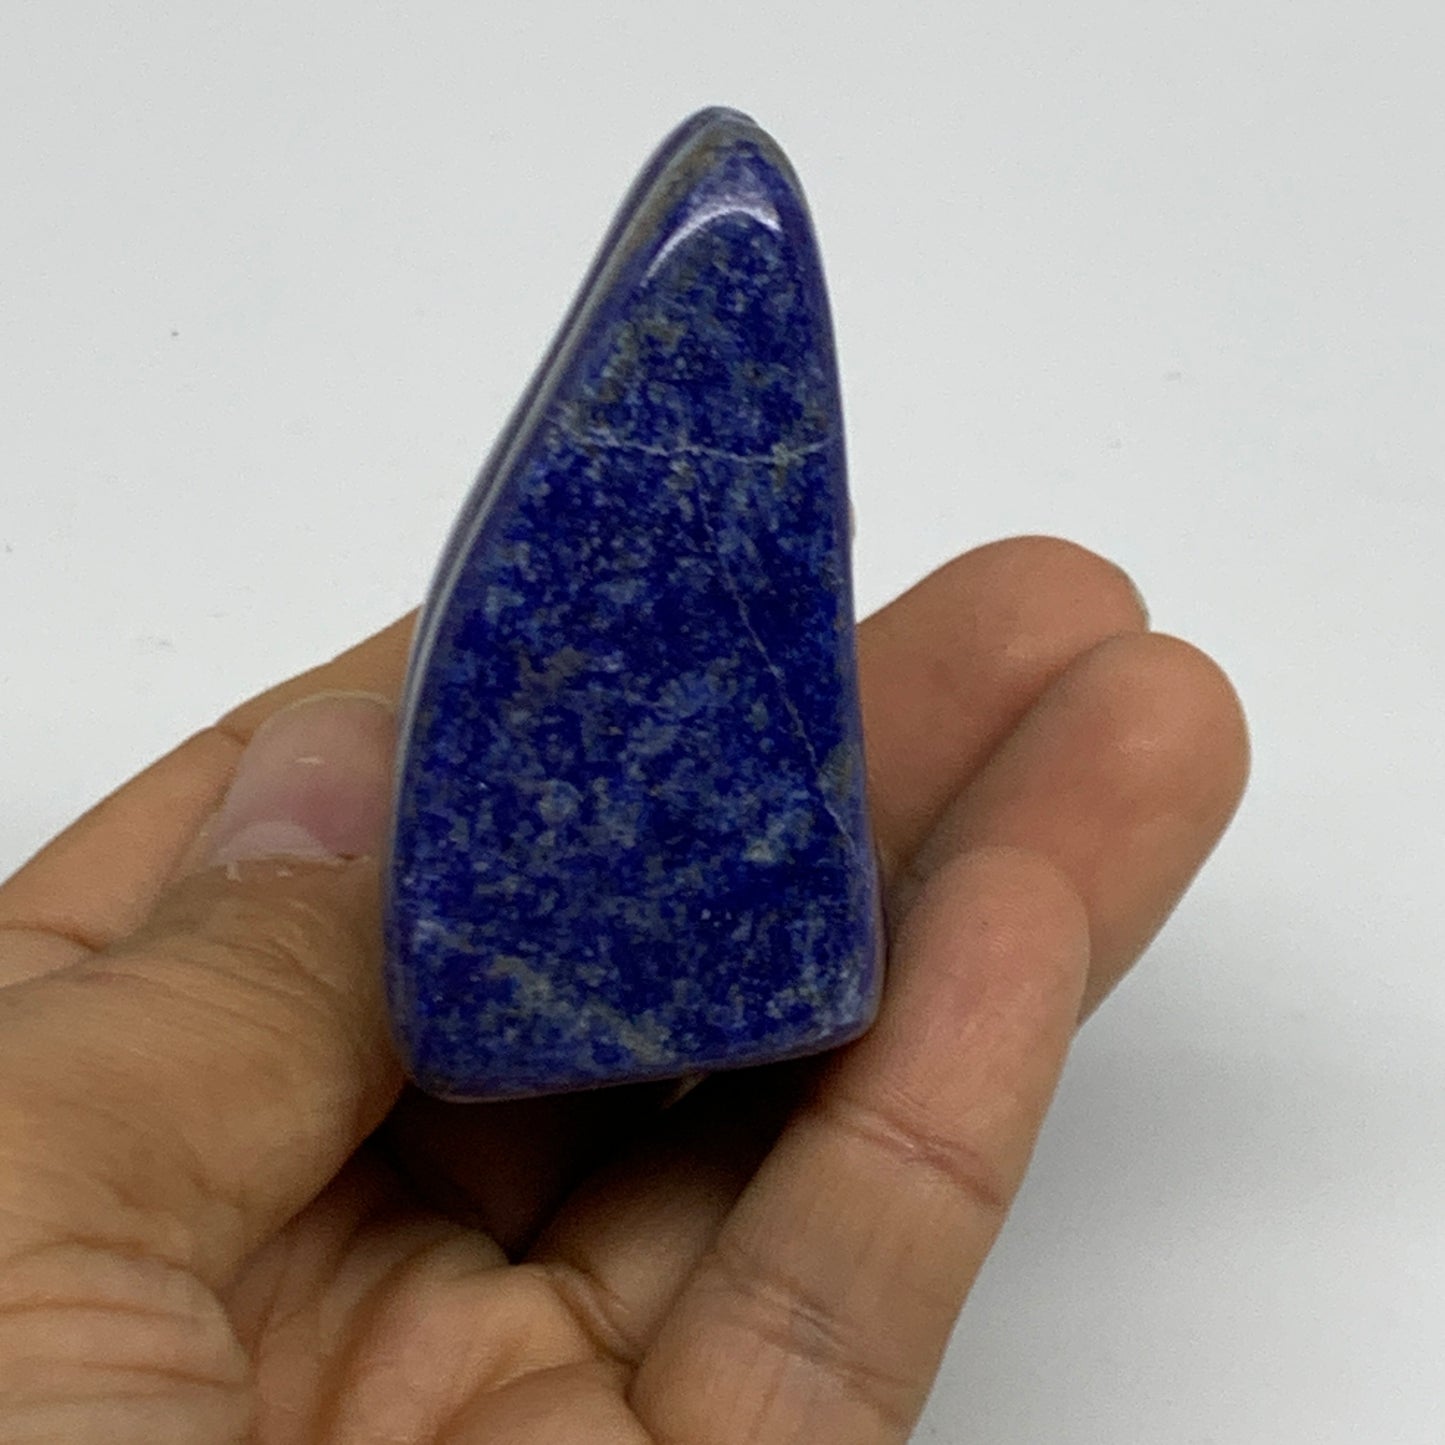 125g, 2.3"x1.4"x1.2", Natural Freeform Lapis Lazuli from Afghanistan, B33078